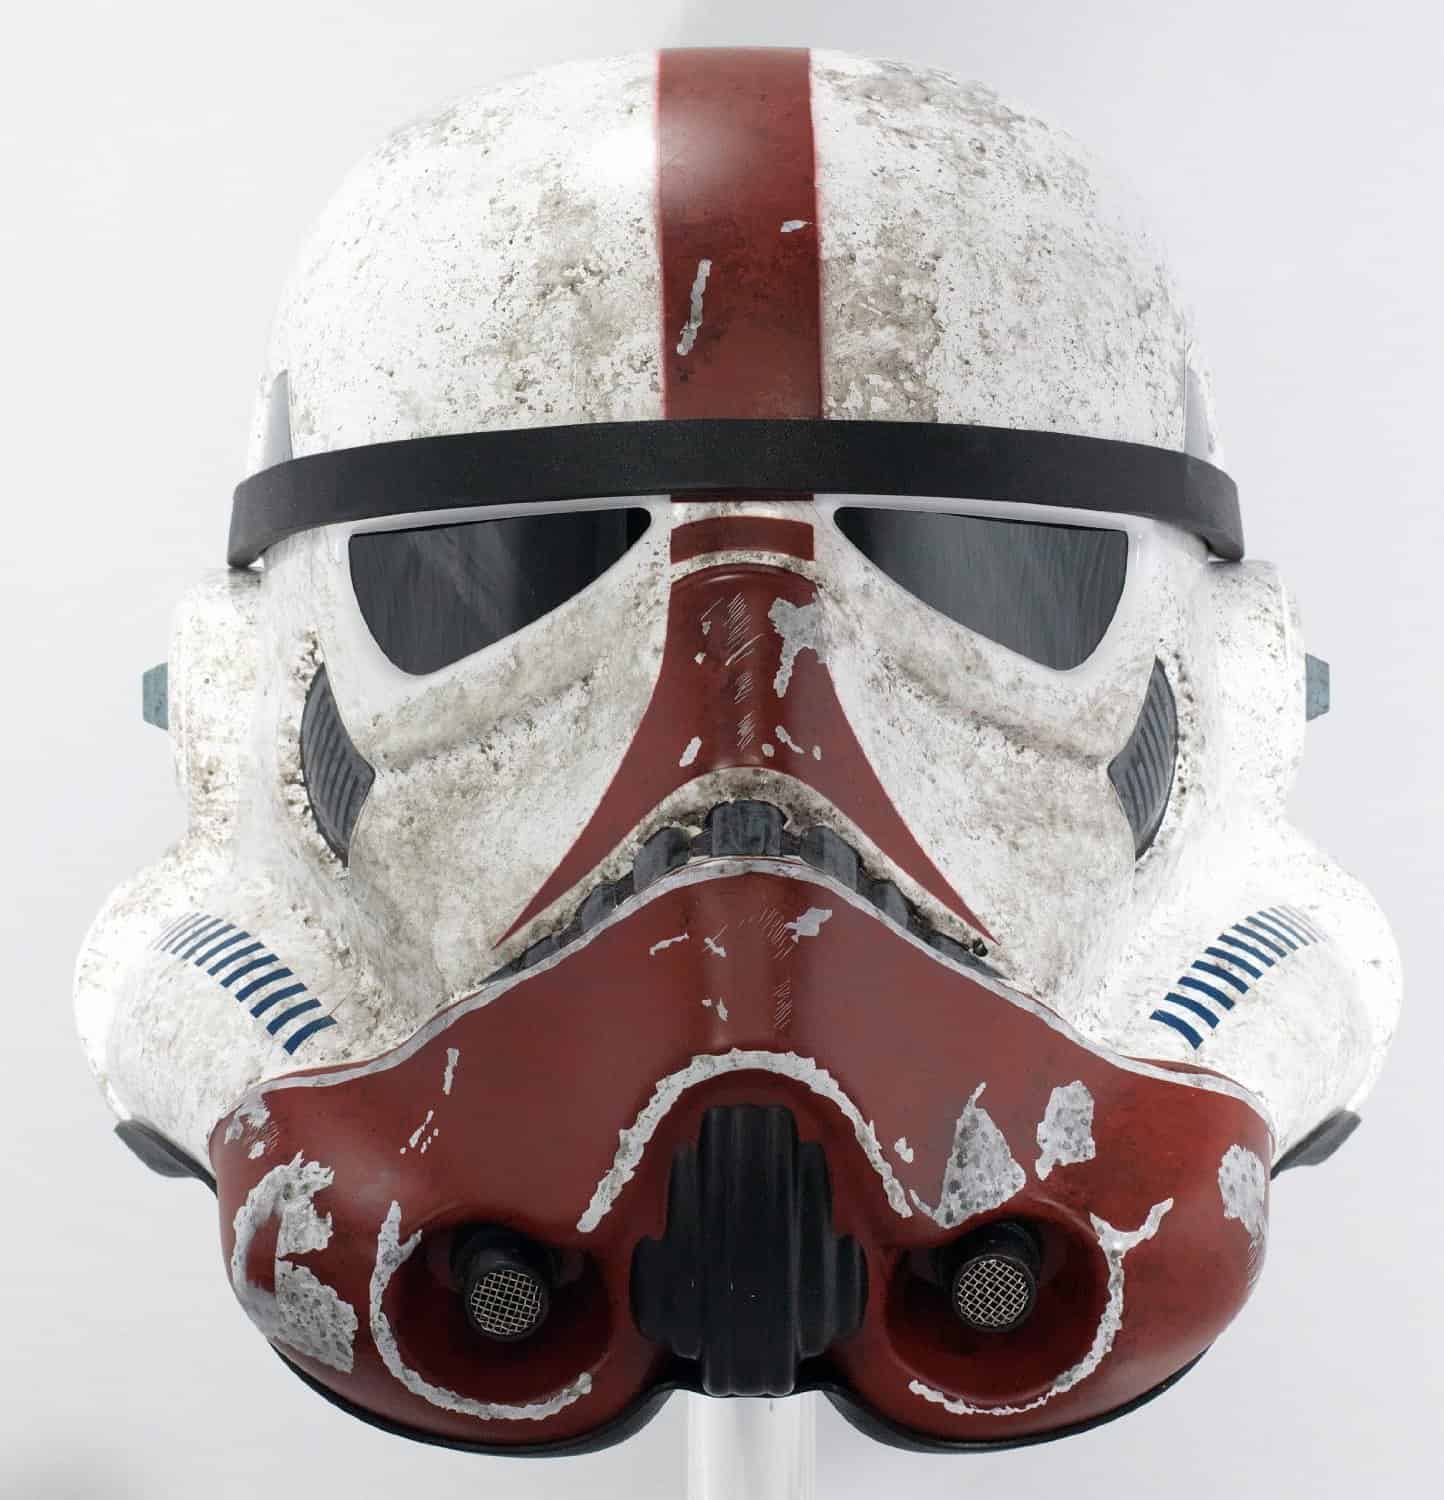 eFX Star Wars the Force Unleashed Incinerator Stormtrooper Helmet Cool Cosplay Kit